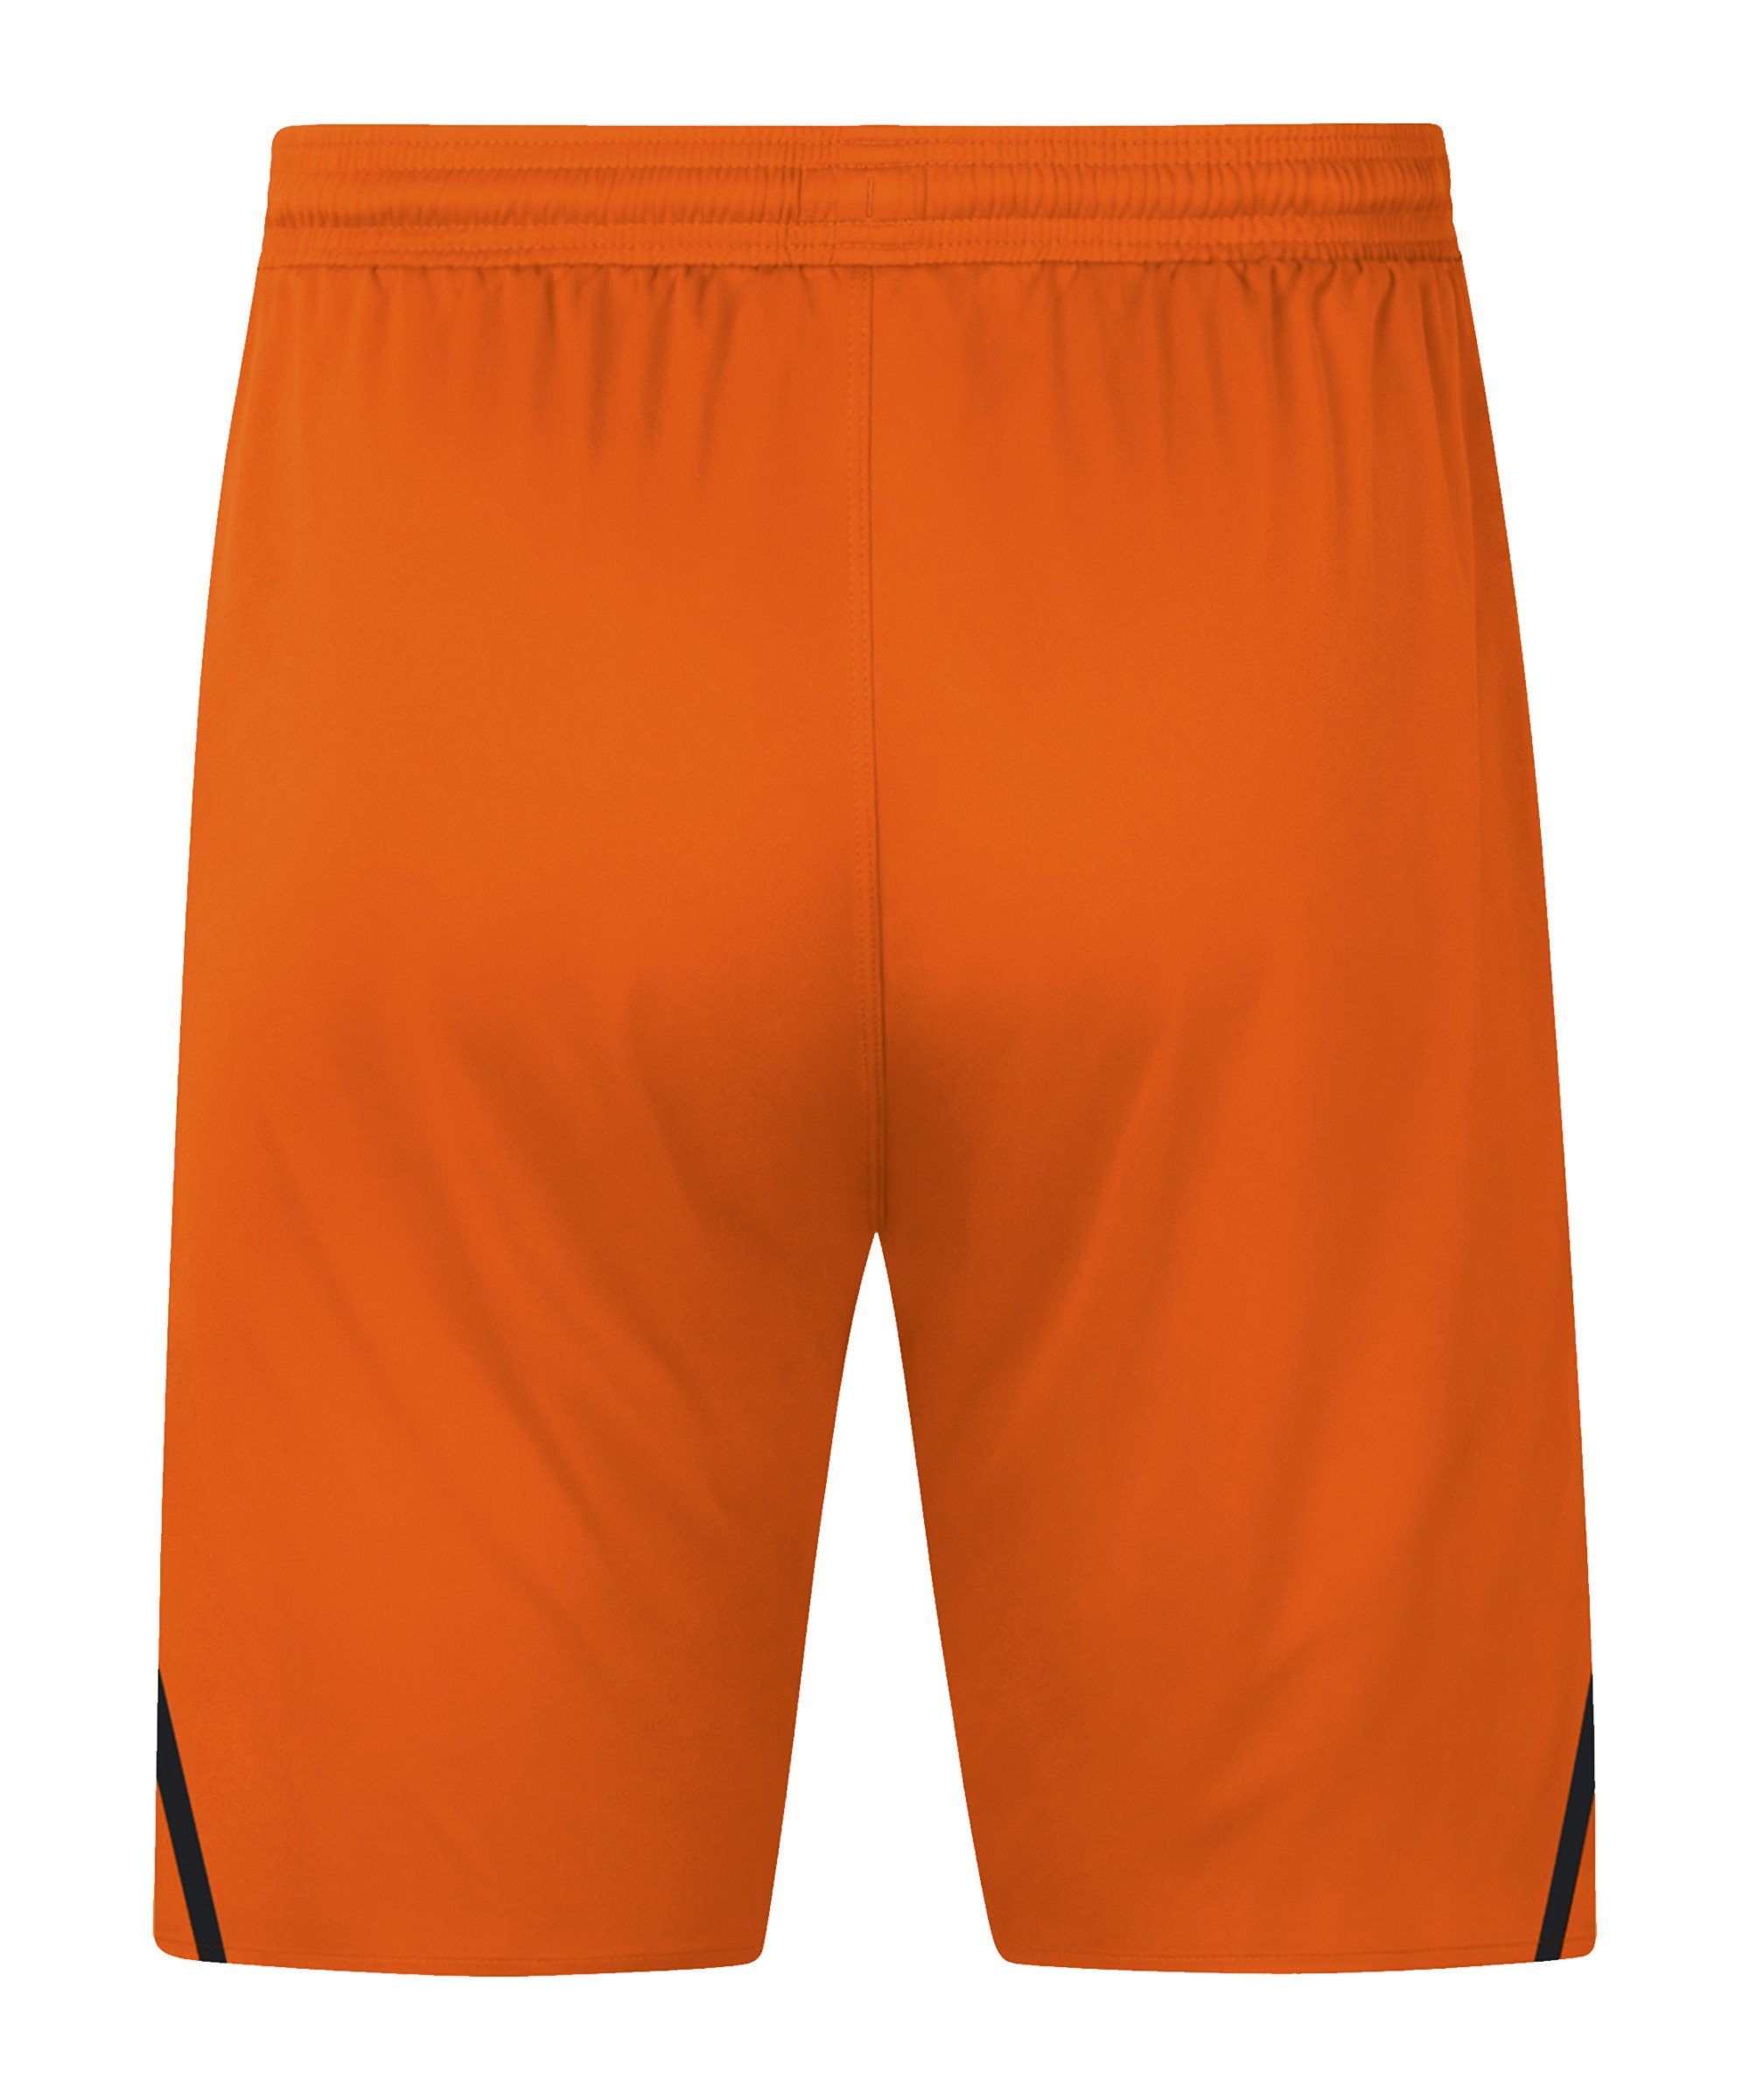 orangeschwarz Challenge Jako Sporthose Short